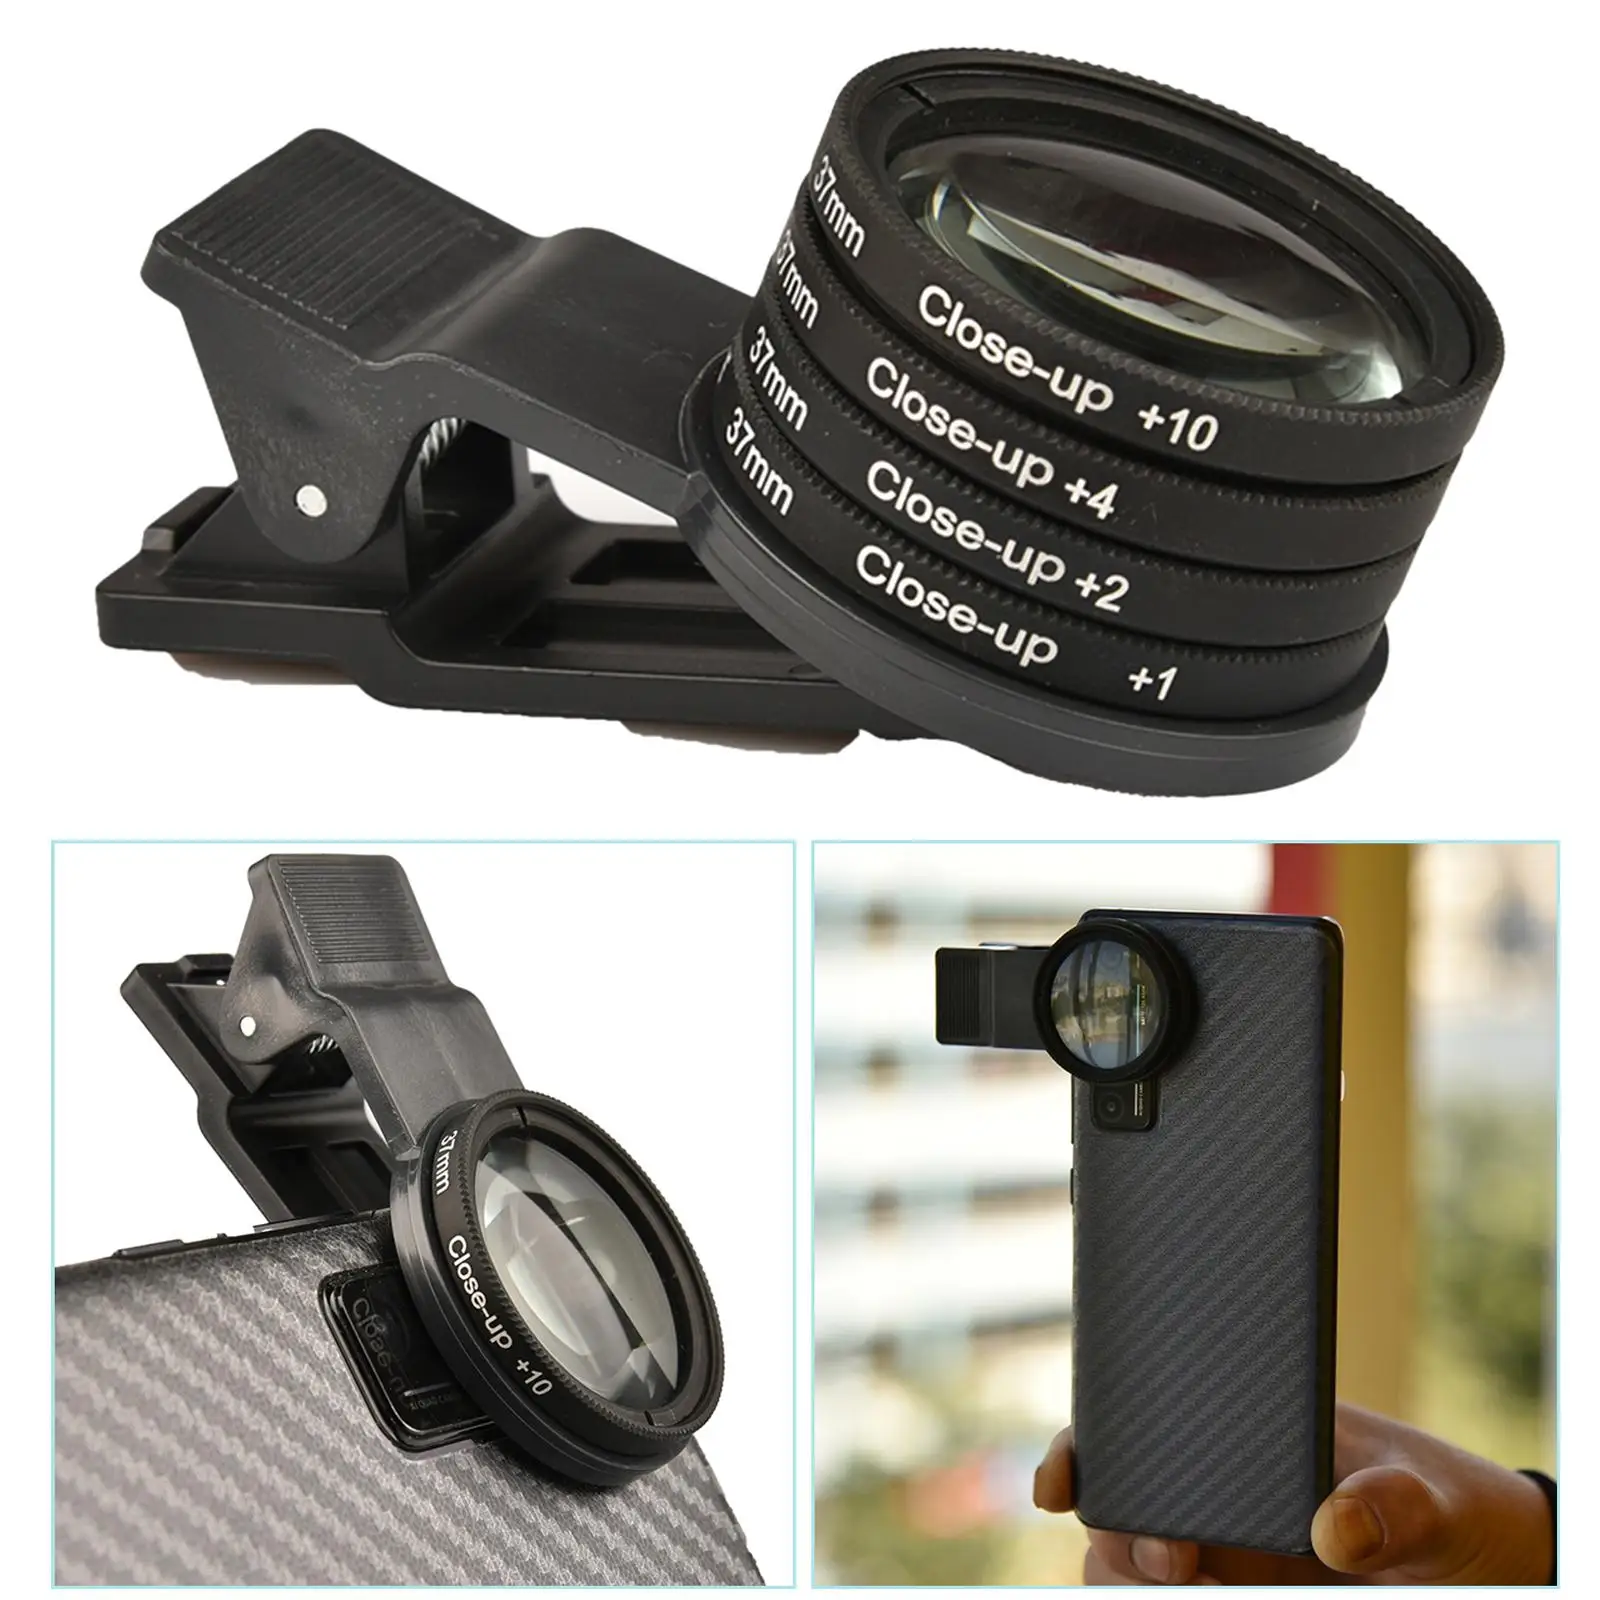 37mm Close up Filter Kit 4Pcs (+1,+2,+4,+10) Macro Lens Filter 37mm Filter Thread Wide Angle Lens Clip On Phone Camera Lens